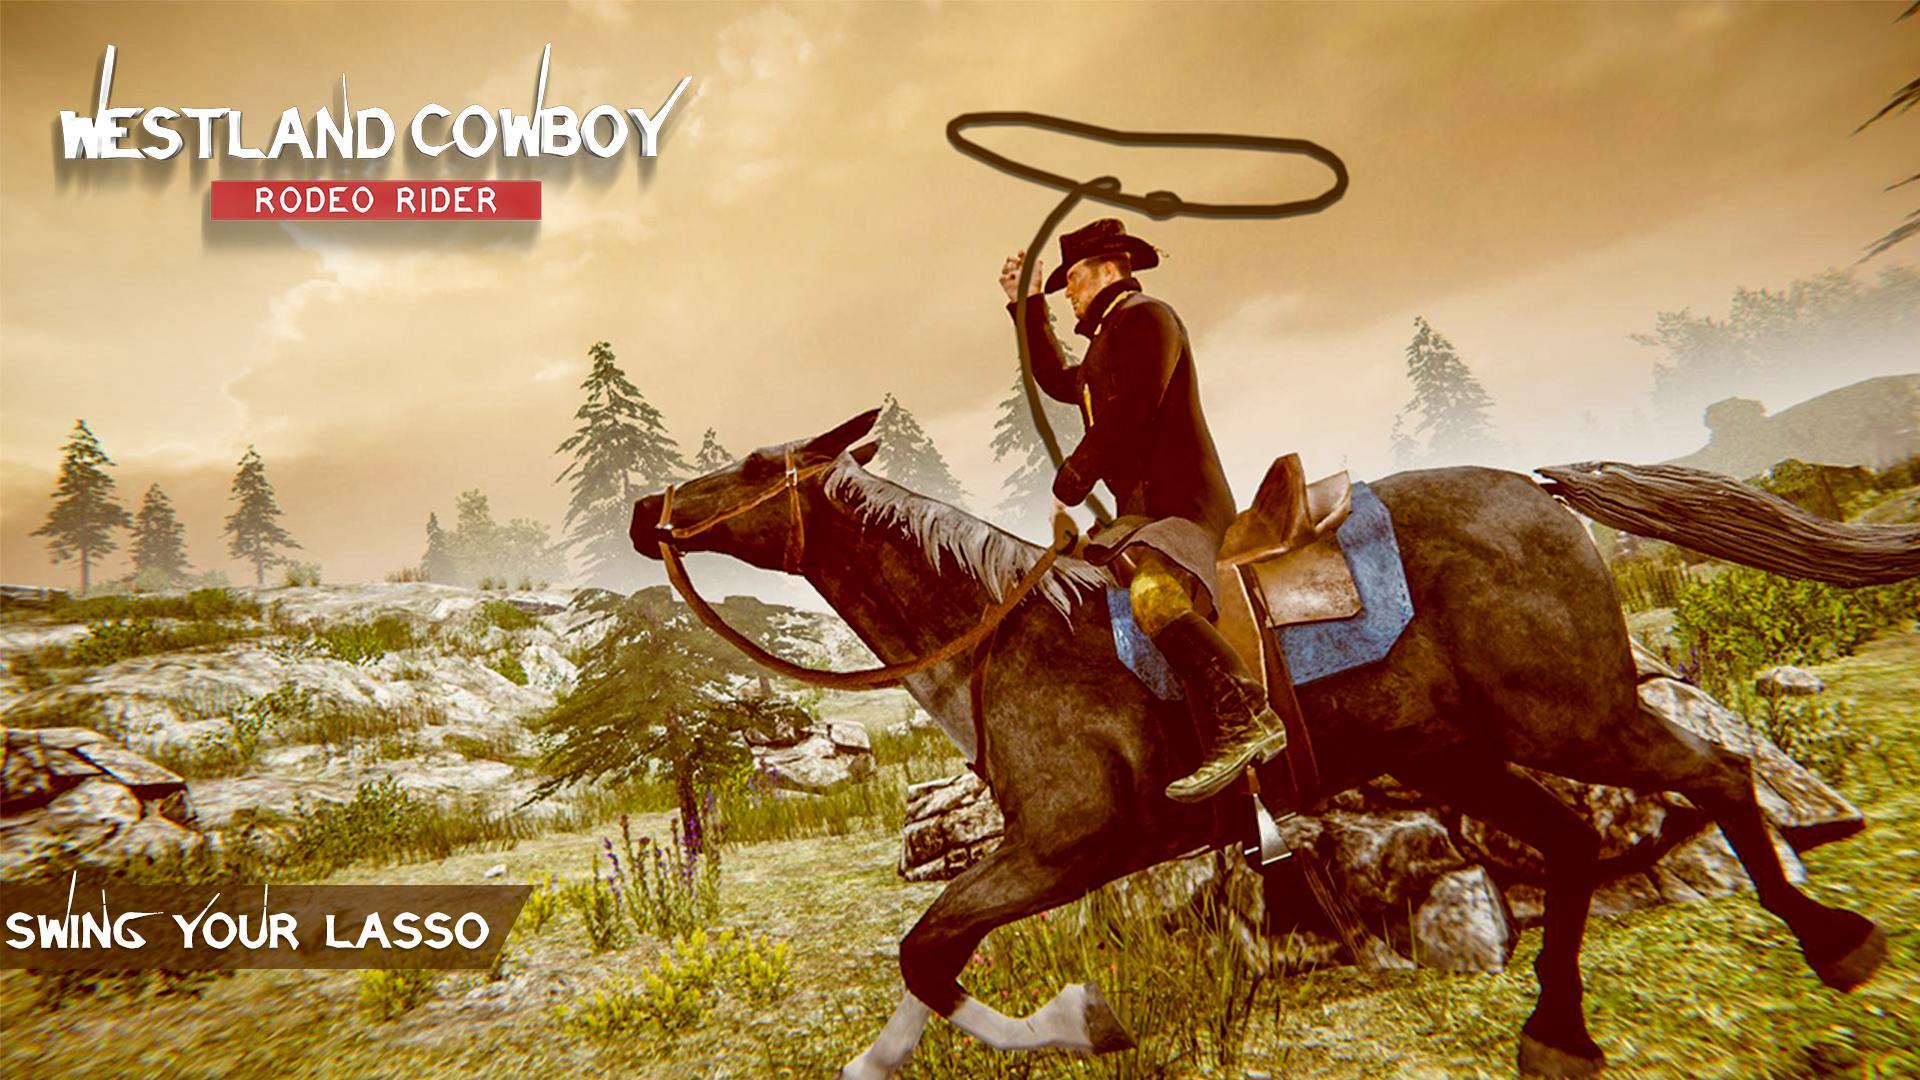 Screenshot 1 of Cowboy Rodeo Rider- Miền Tây hoang dã 2.4